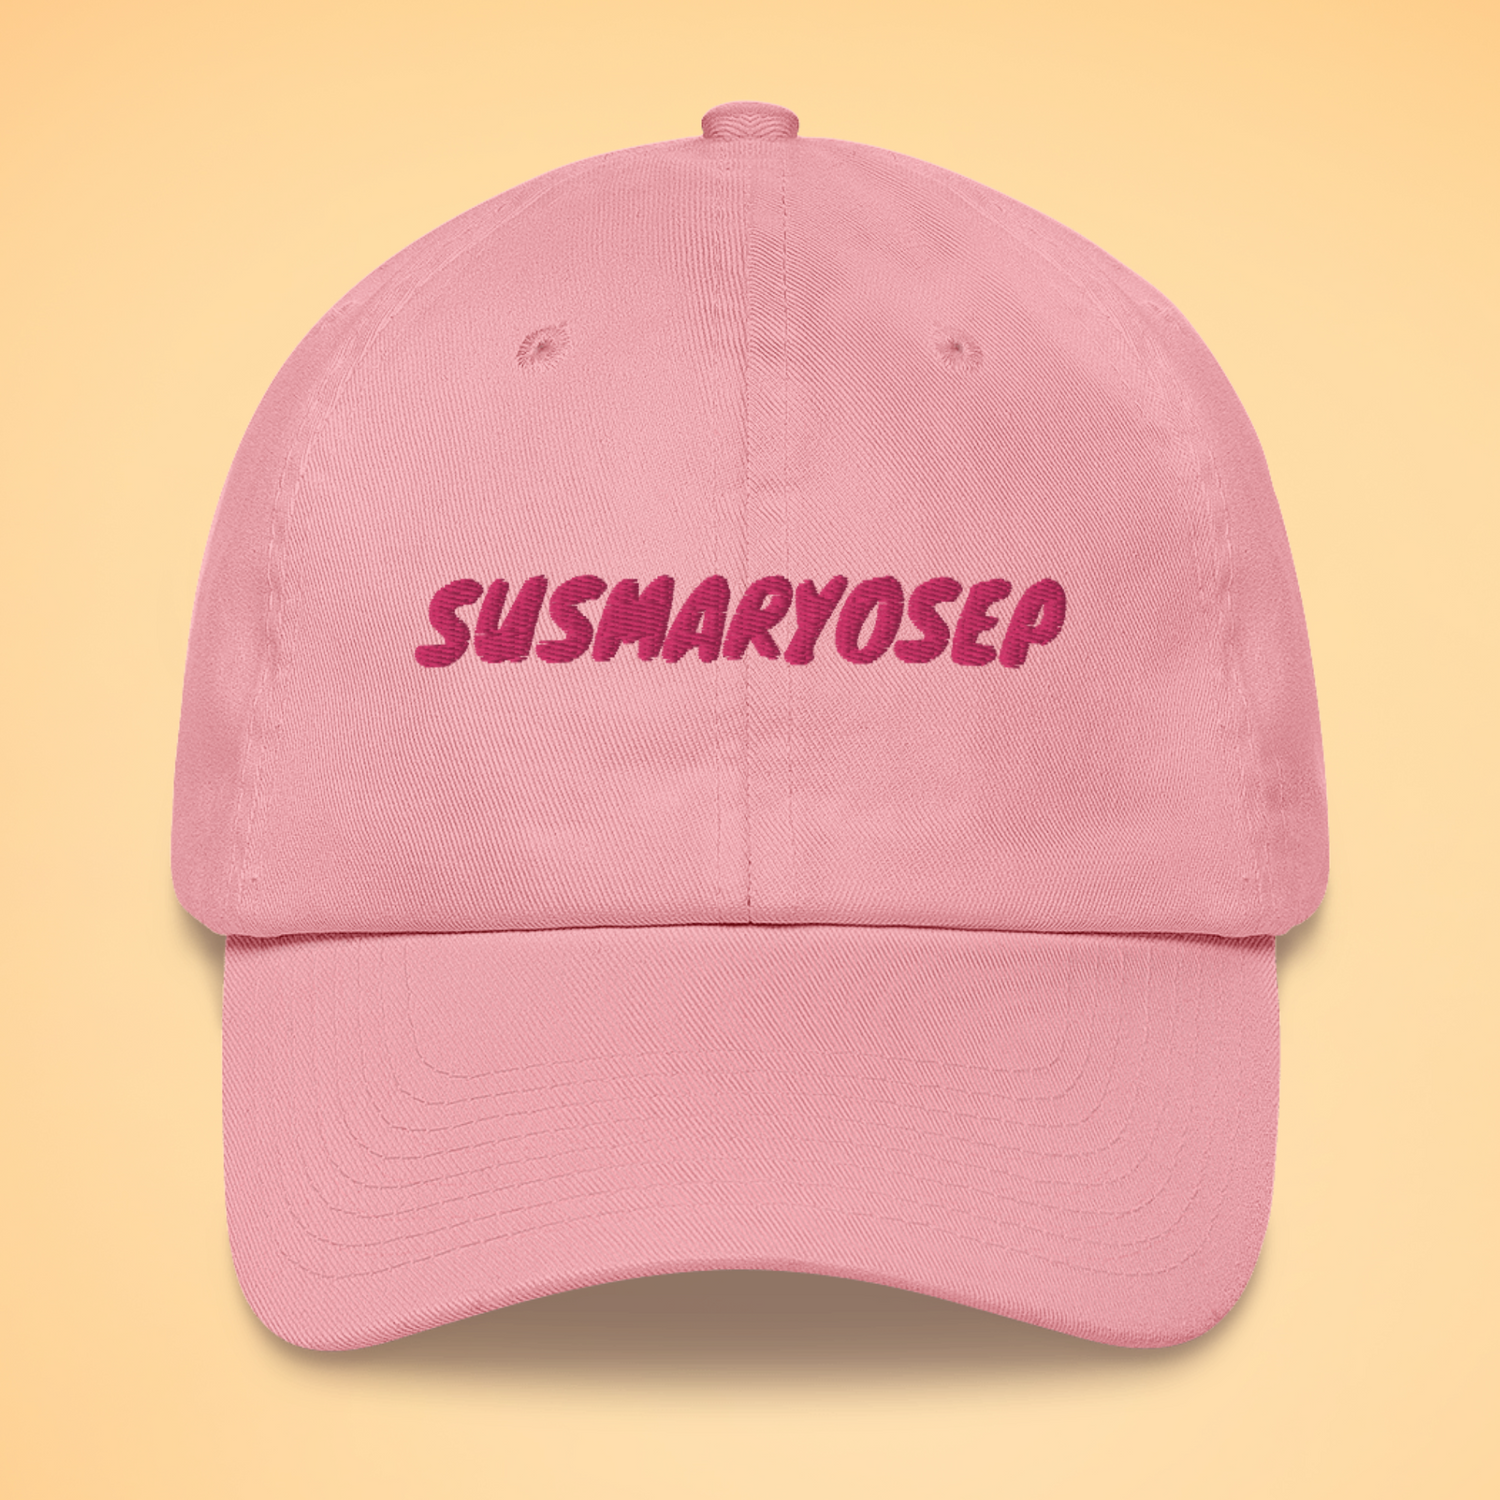 Susmaryosep Filipino Embroidered Cotton Baseball Cap in Pink